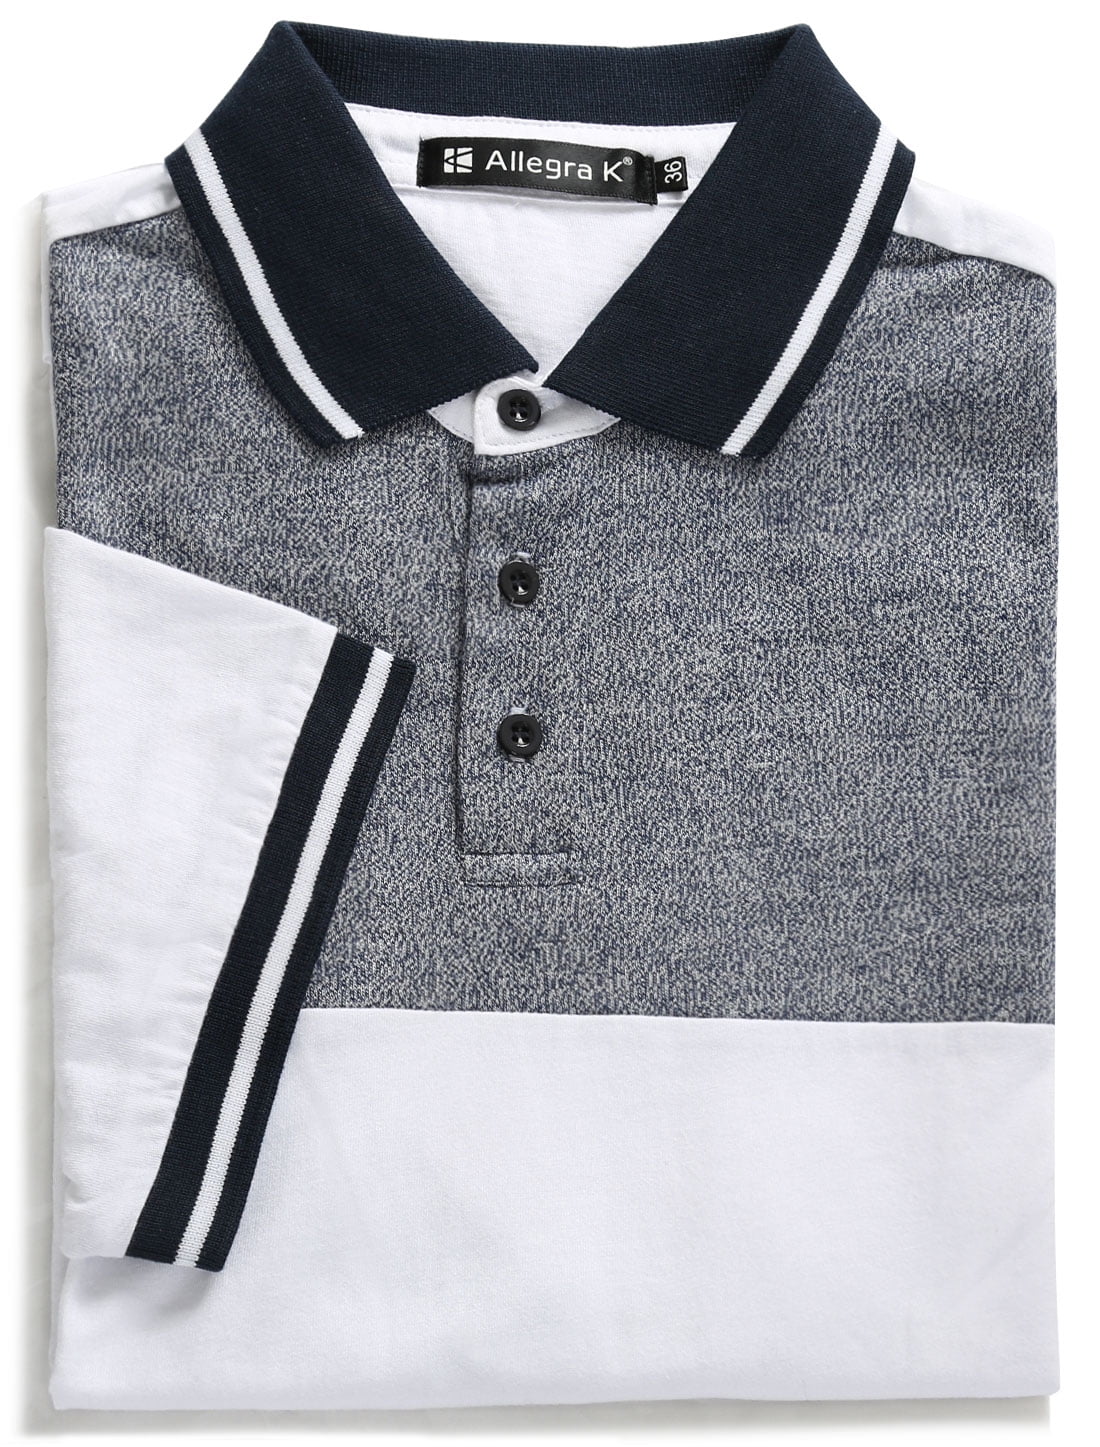 cotton golf shirts canada